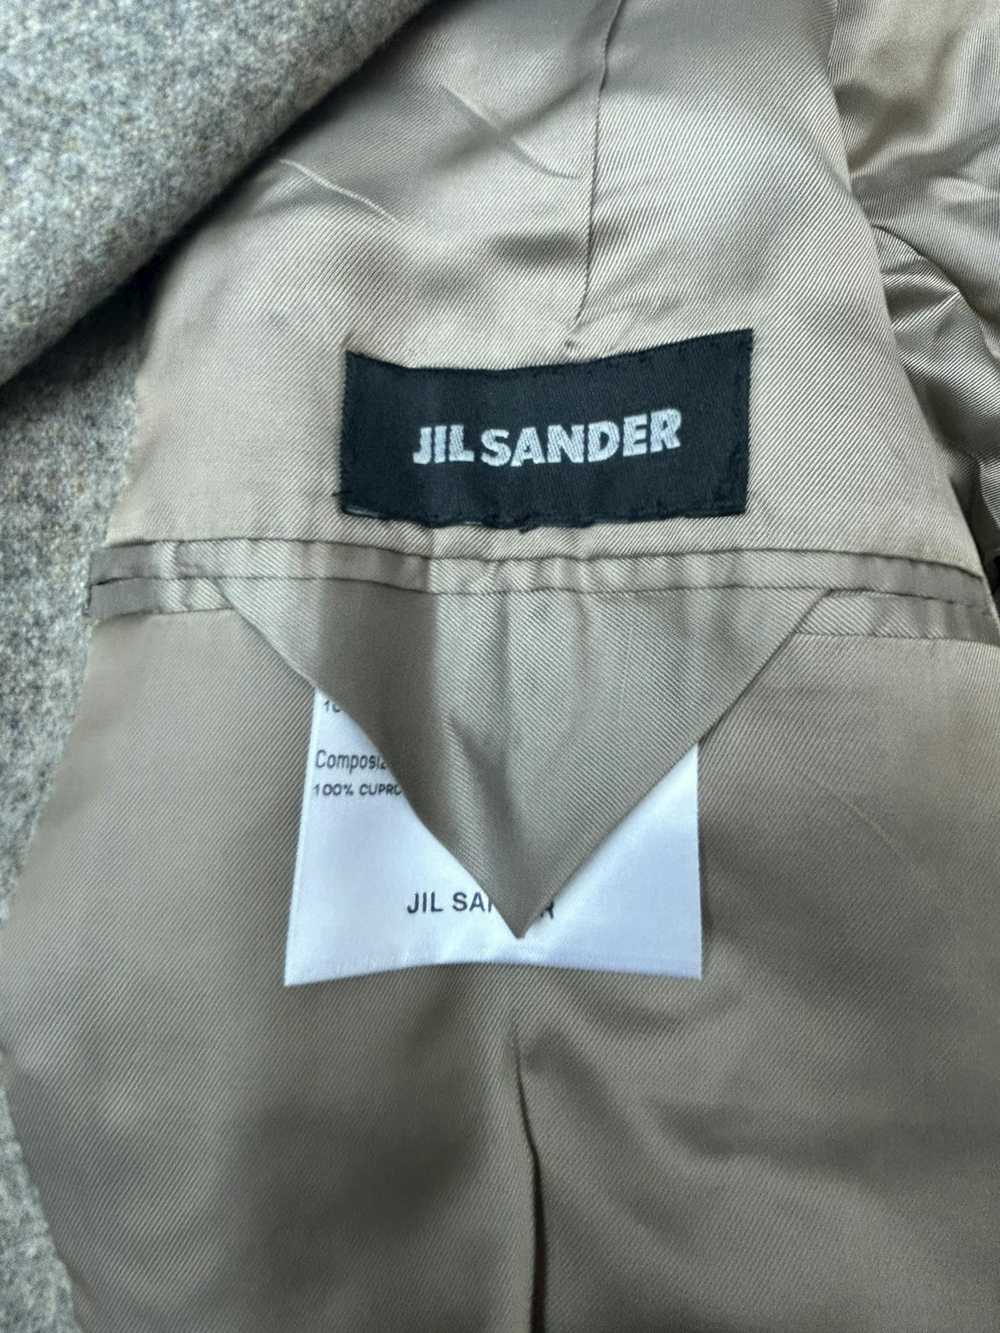 Jil Sander Jil sanders men’s suit - model 187101 - image 7